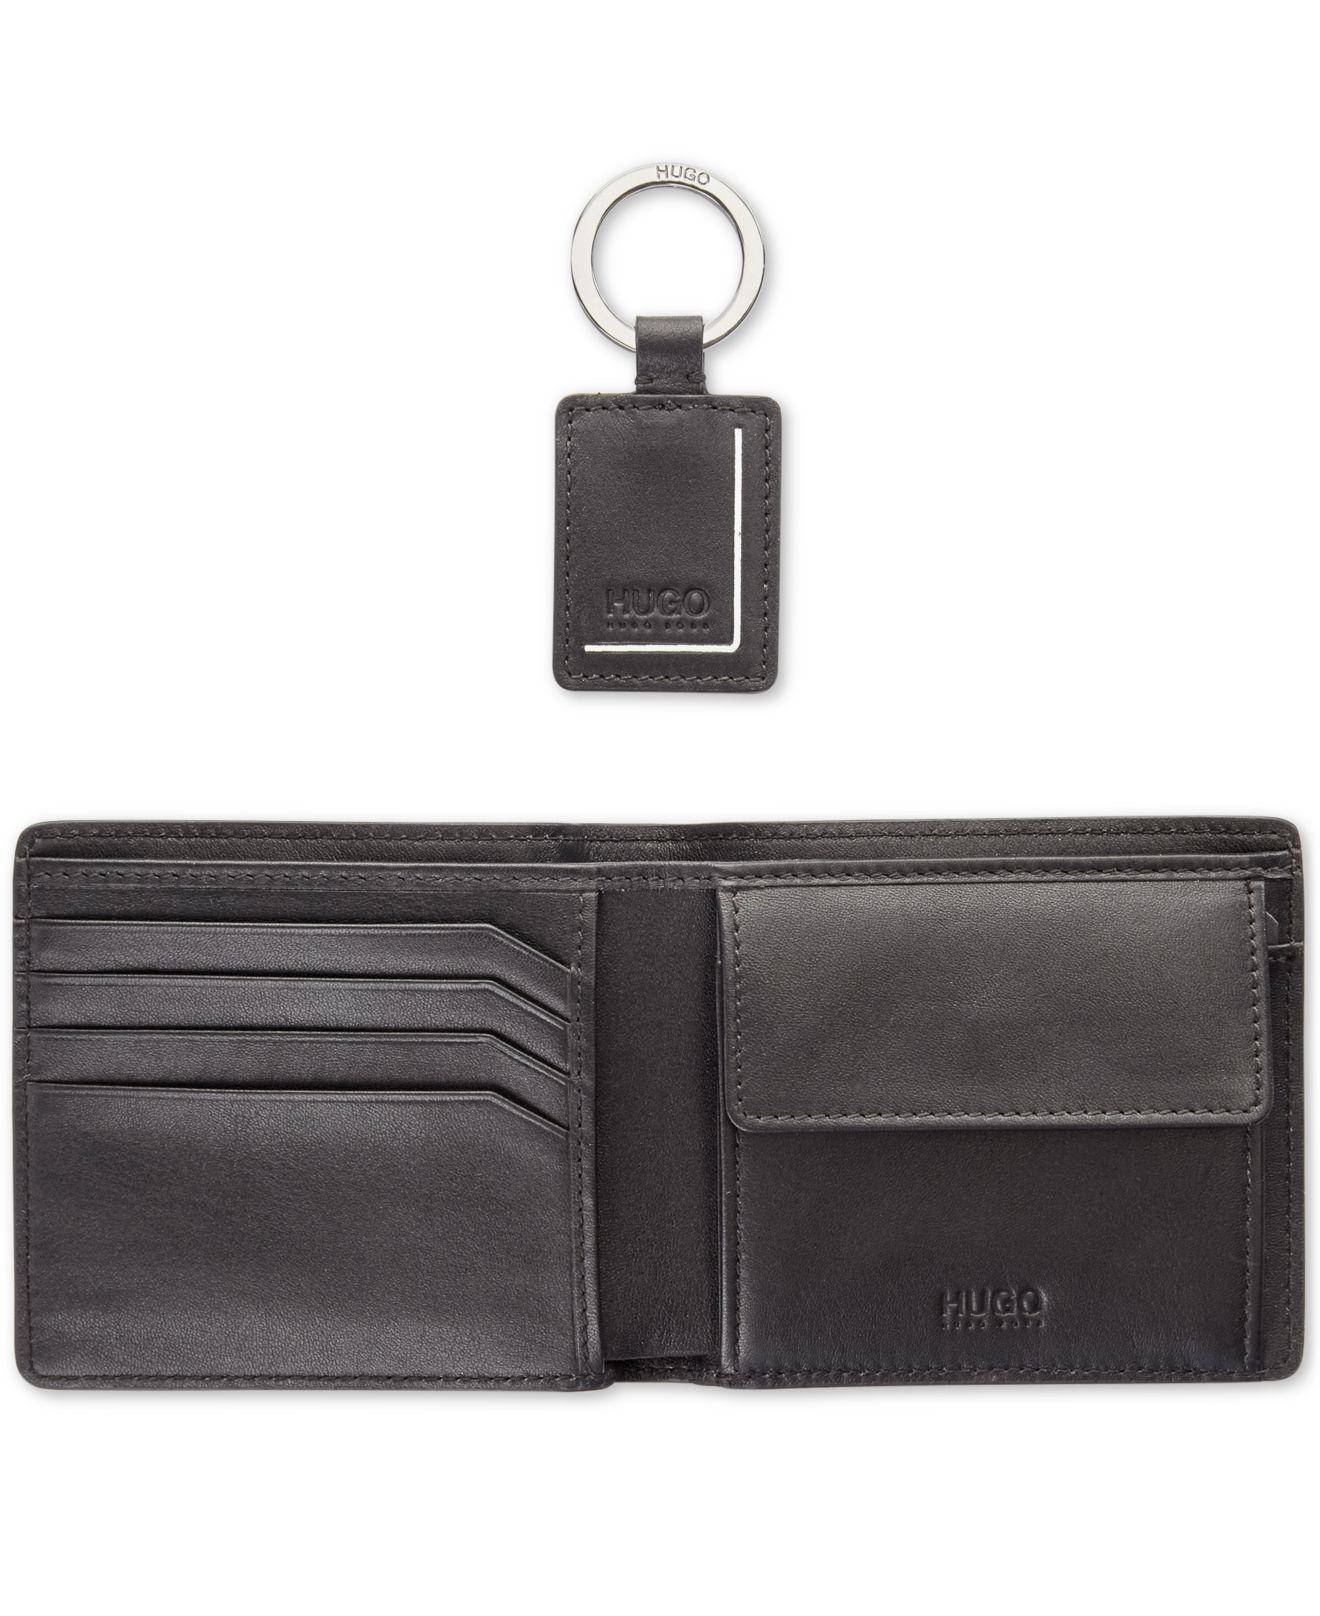 BOSS by HUGO BOSS Leather Wallet & Keychain Set in Black for Men | Lyst